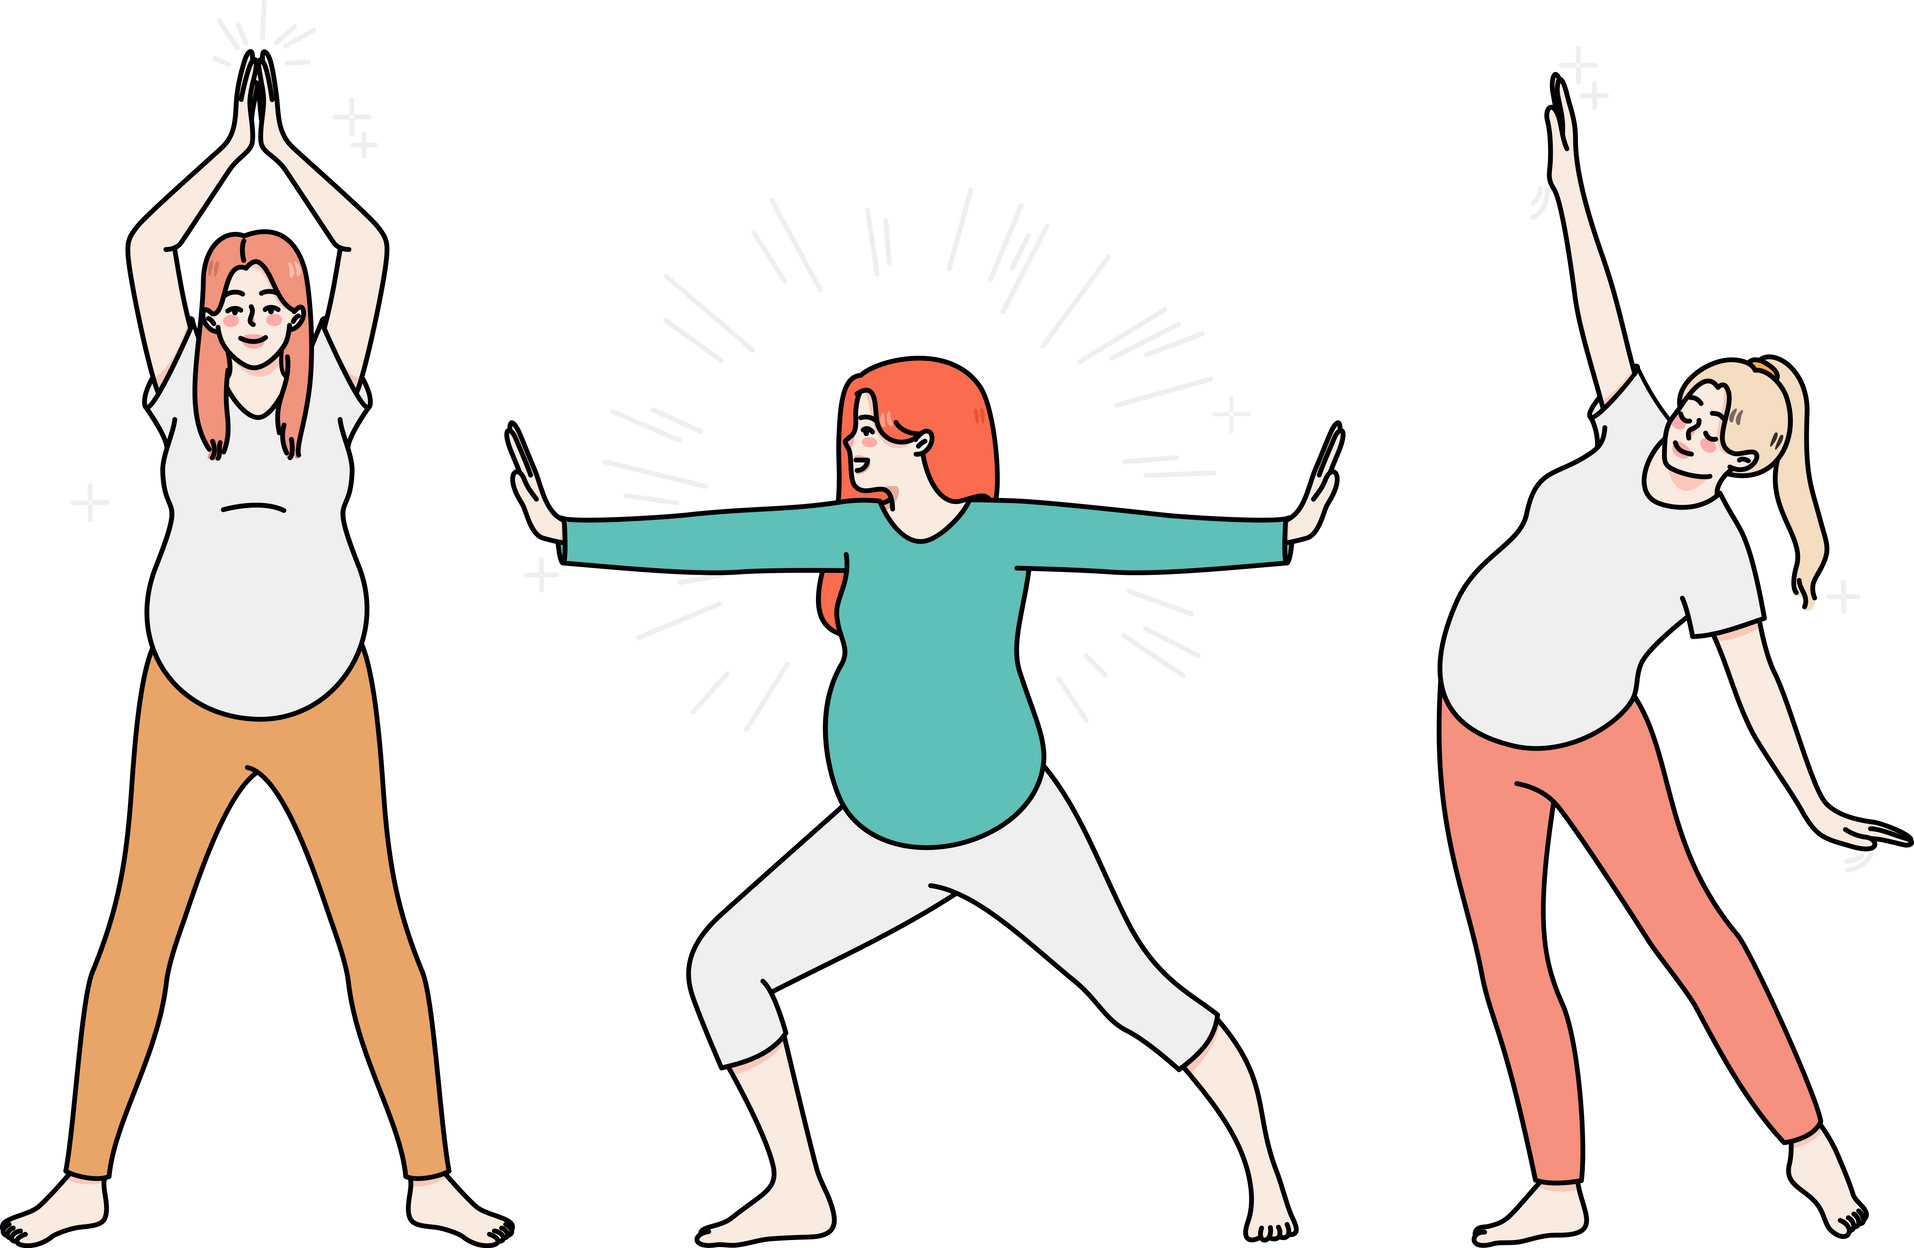 Pregnant Women Exercising